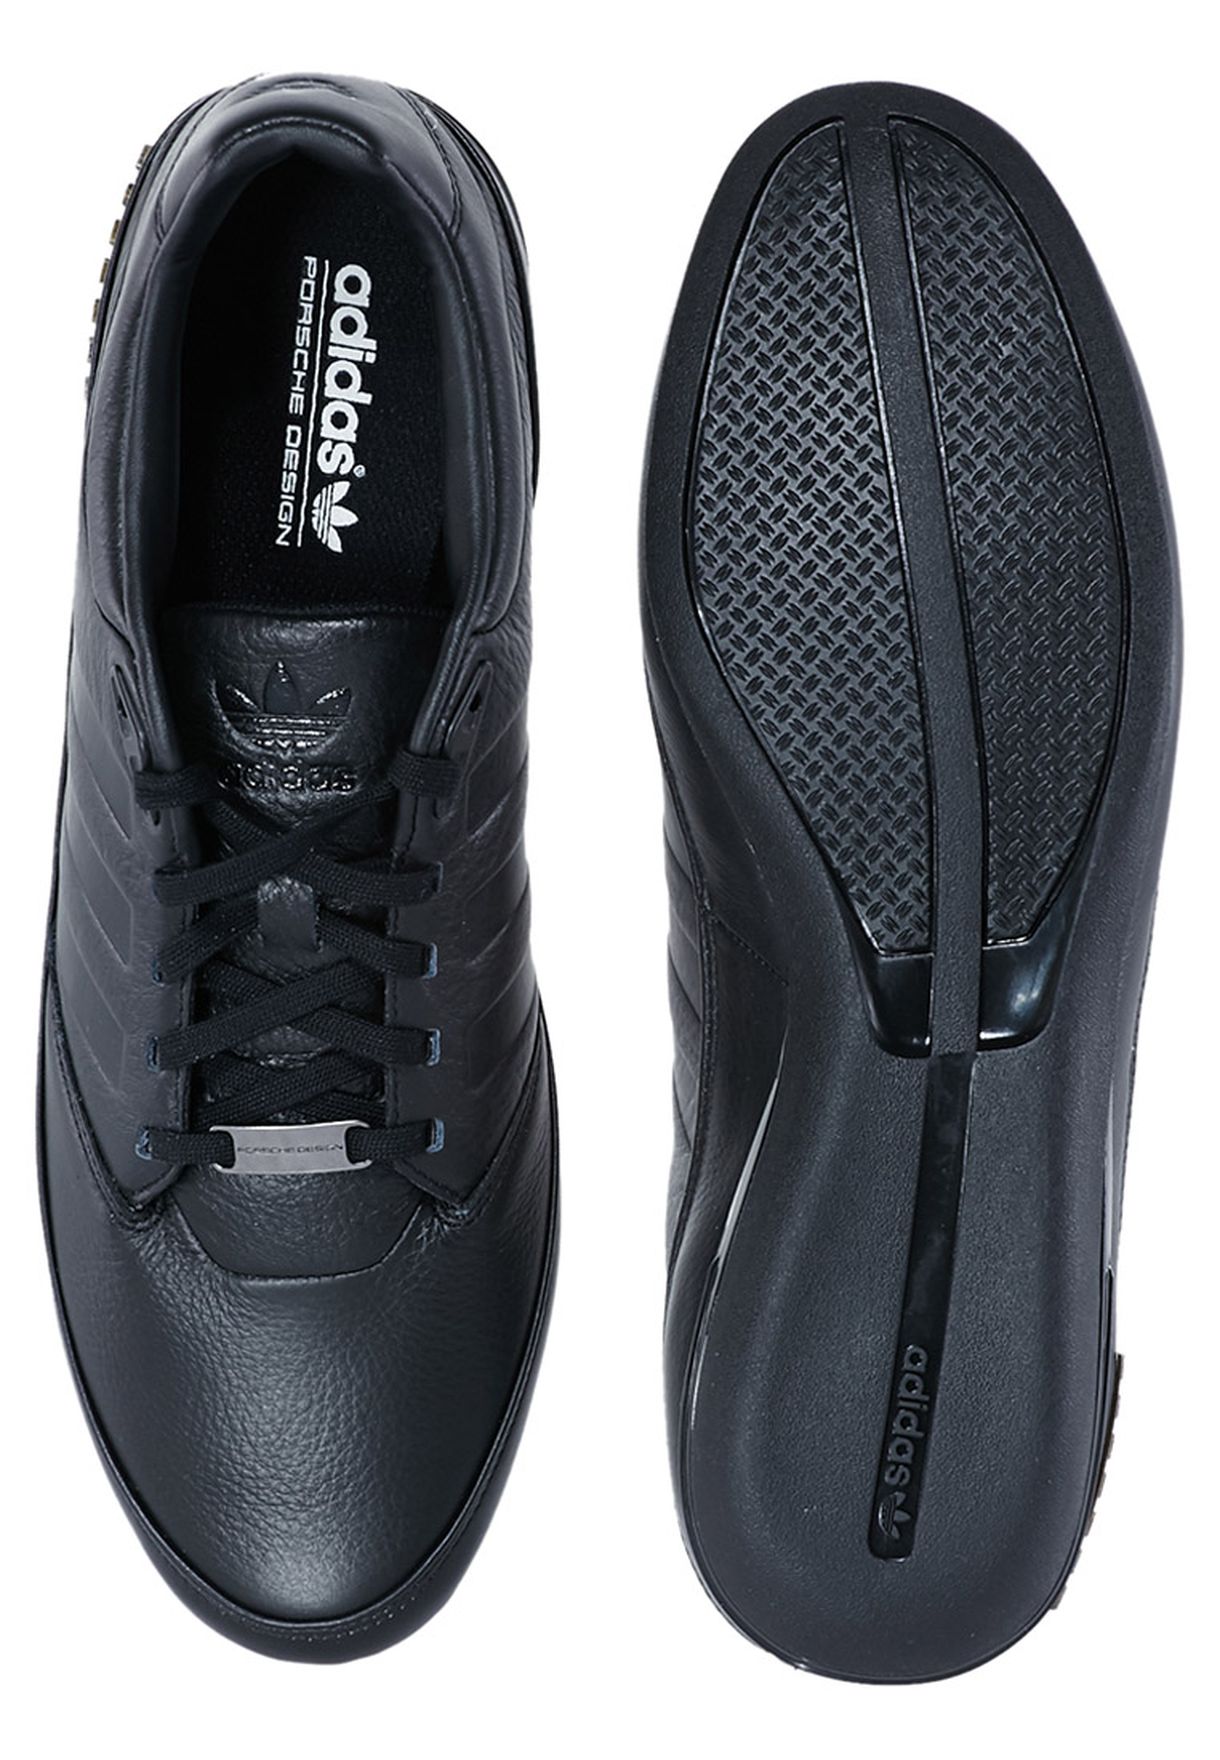 adidas originals porsche typ 64 2. black sneakers